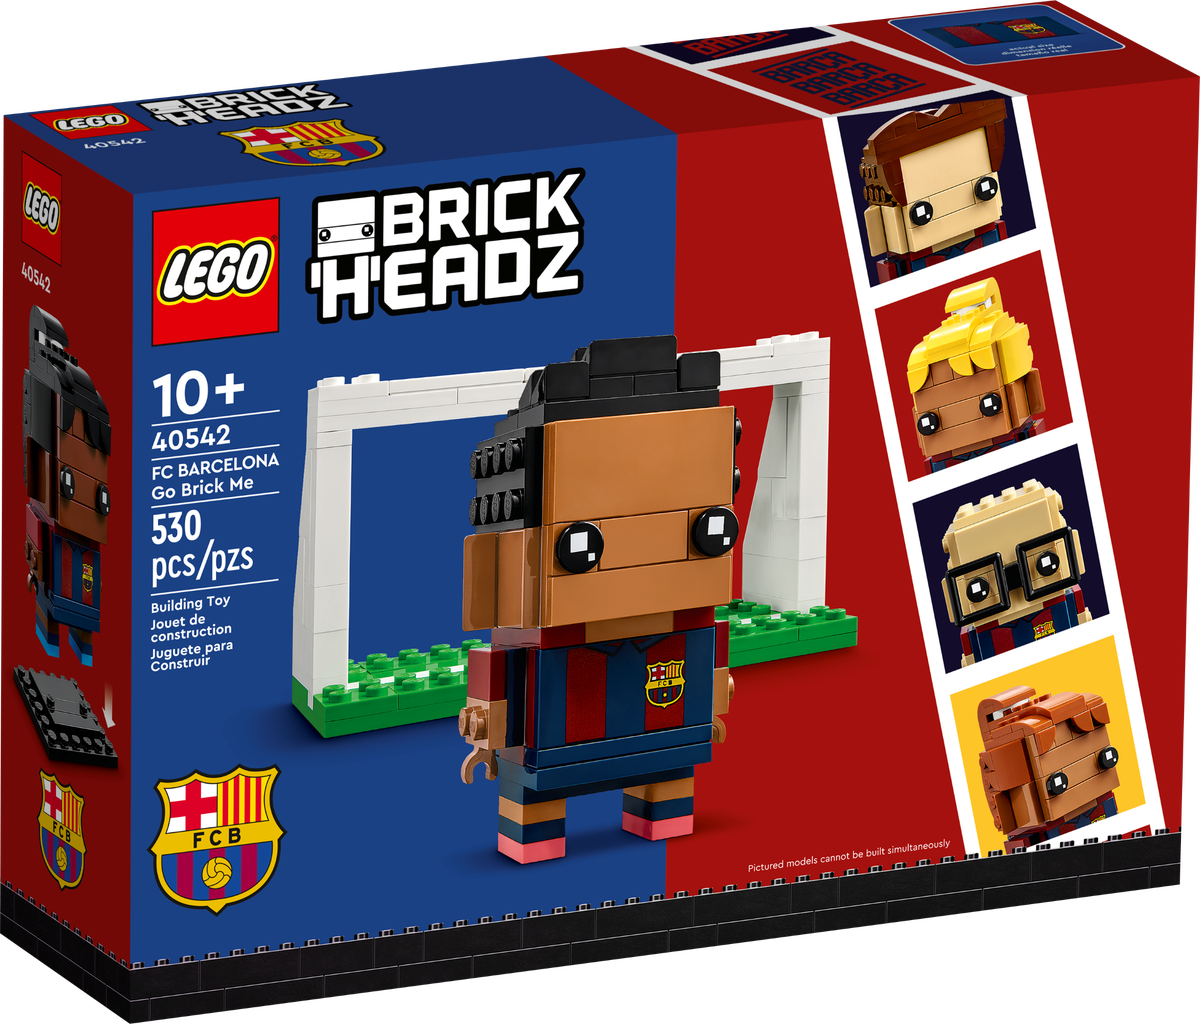 40542: FC Barcelona Go Brick Me